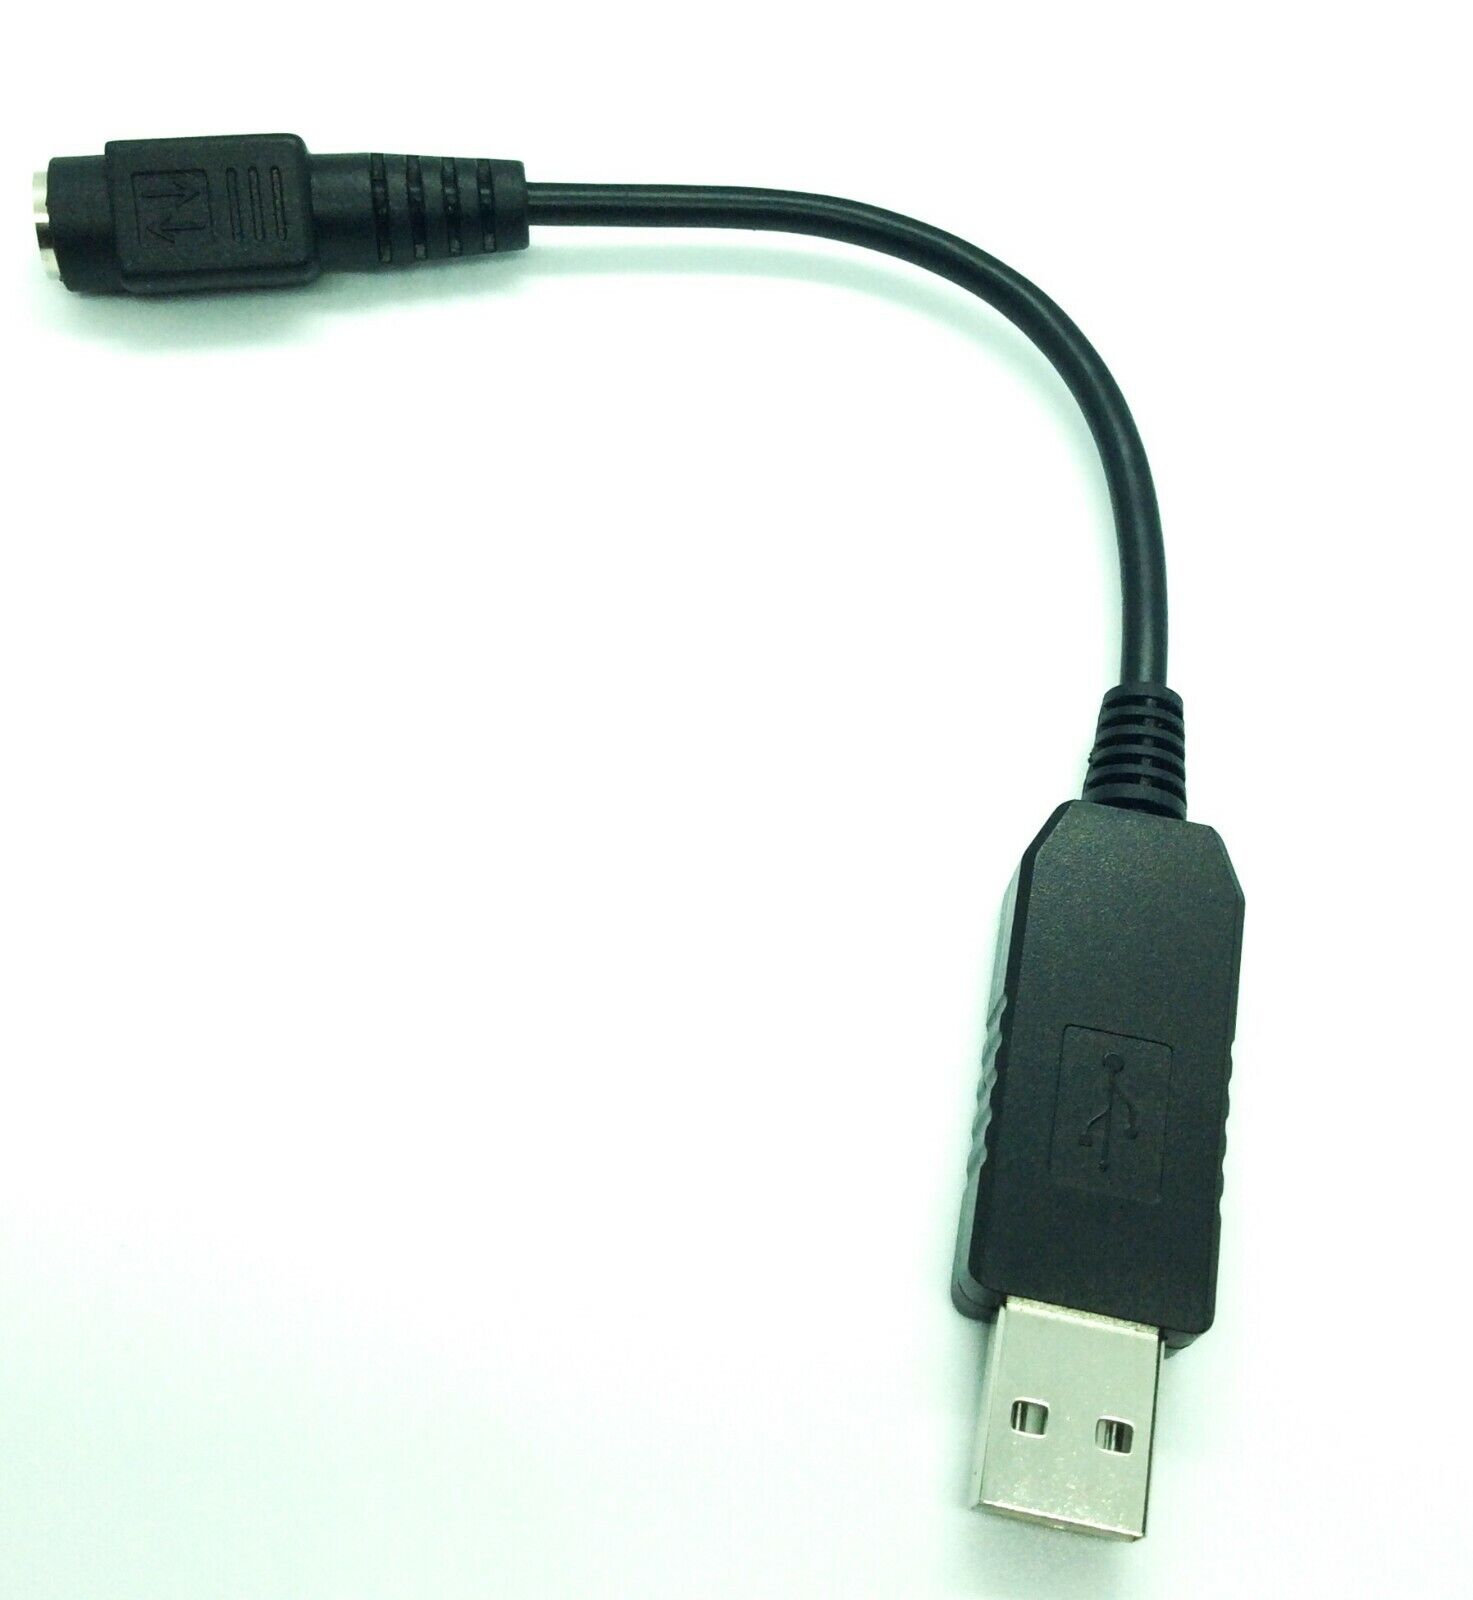 tinkerBOY Apple ADB to USB Keyboard/Mouse Converter Adapter w/ VIA QMK Firmware